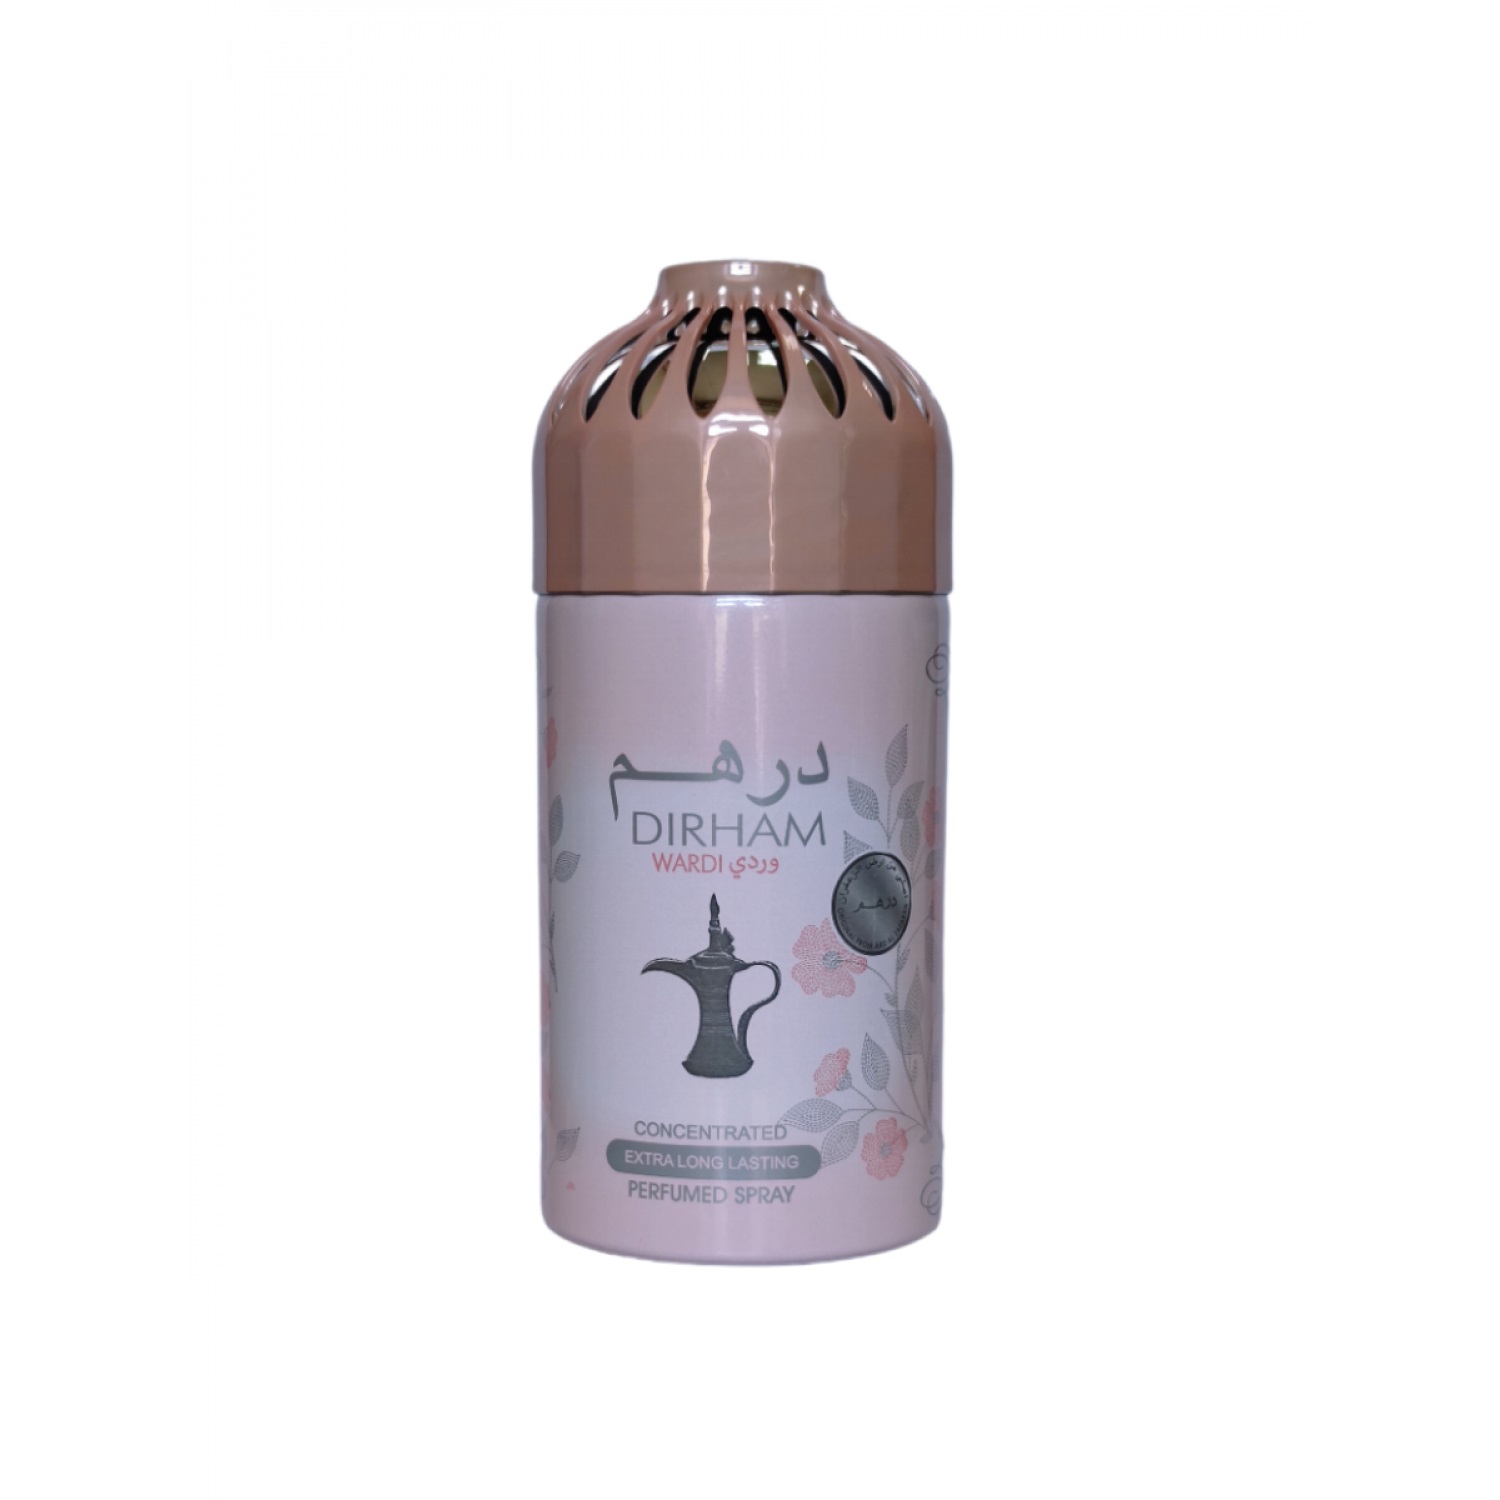 DIRHAM WARDI Concentrated Extra Long Lasting Perfumed Spray, Ard Al Zaafaran Trading (ДИРХАМ ВАРДИ концентрированный экстра стойкий дезодорант, Ард Аль Заафаран), 250 мл.